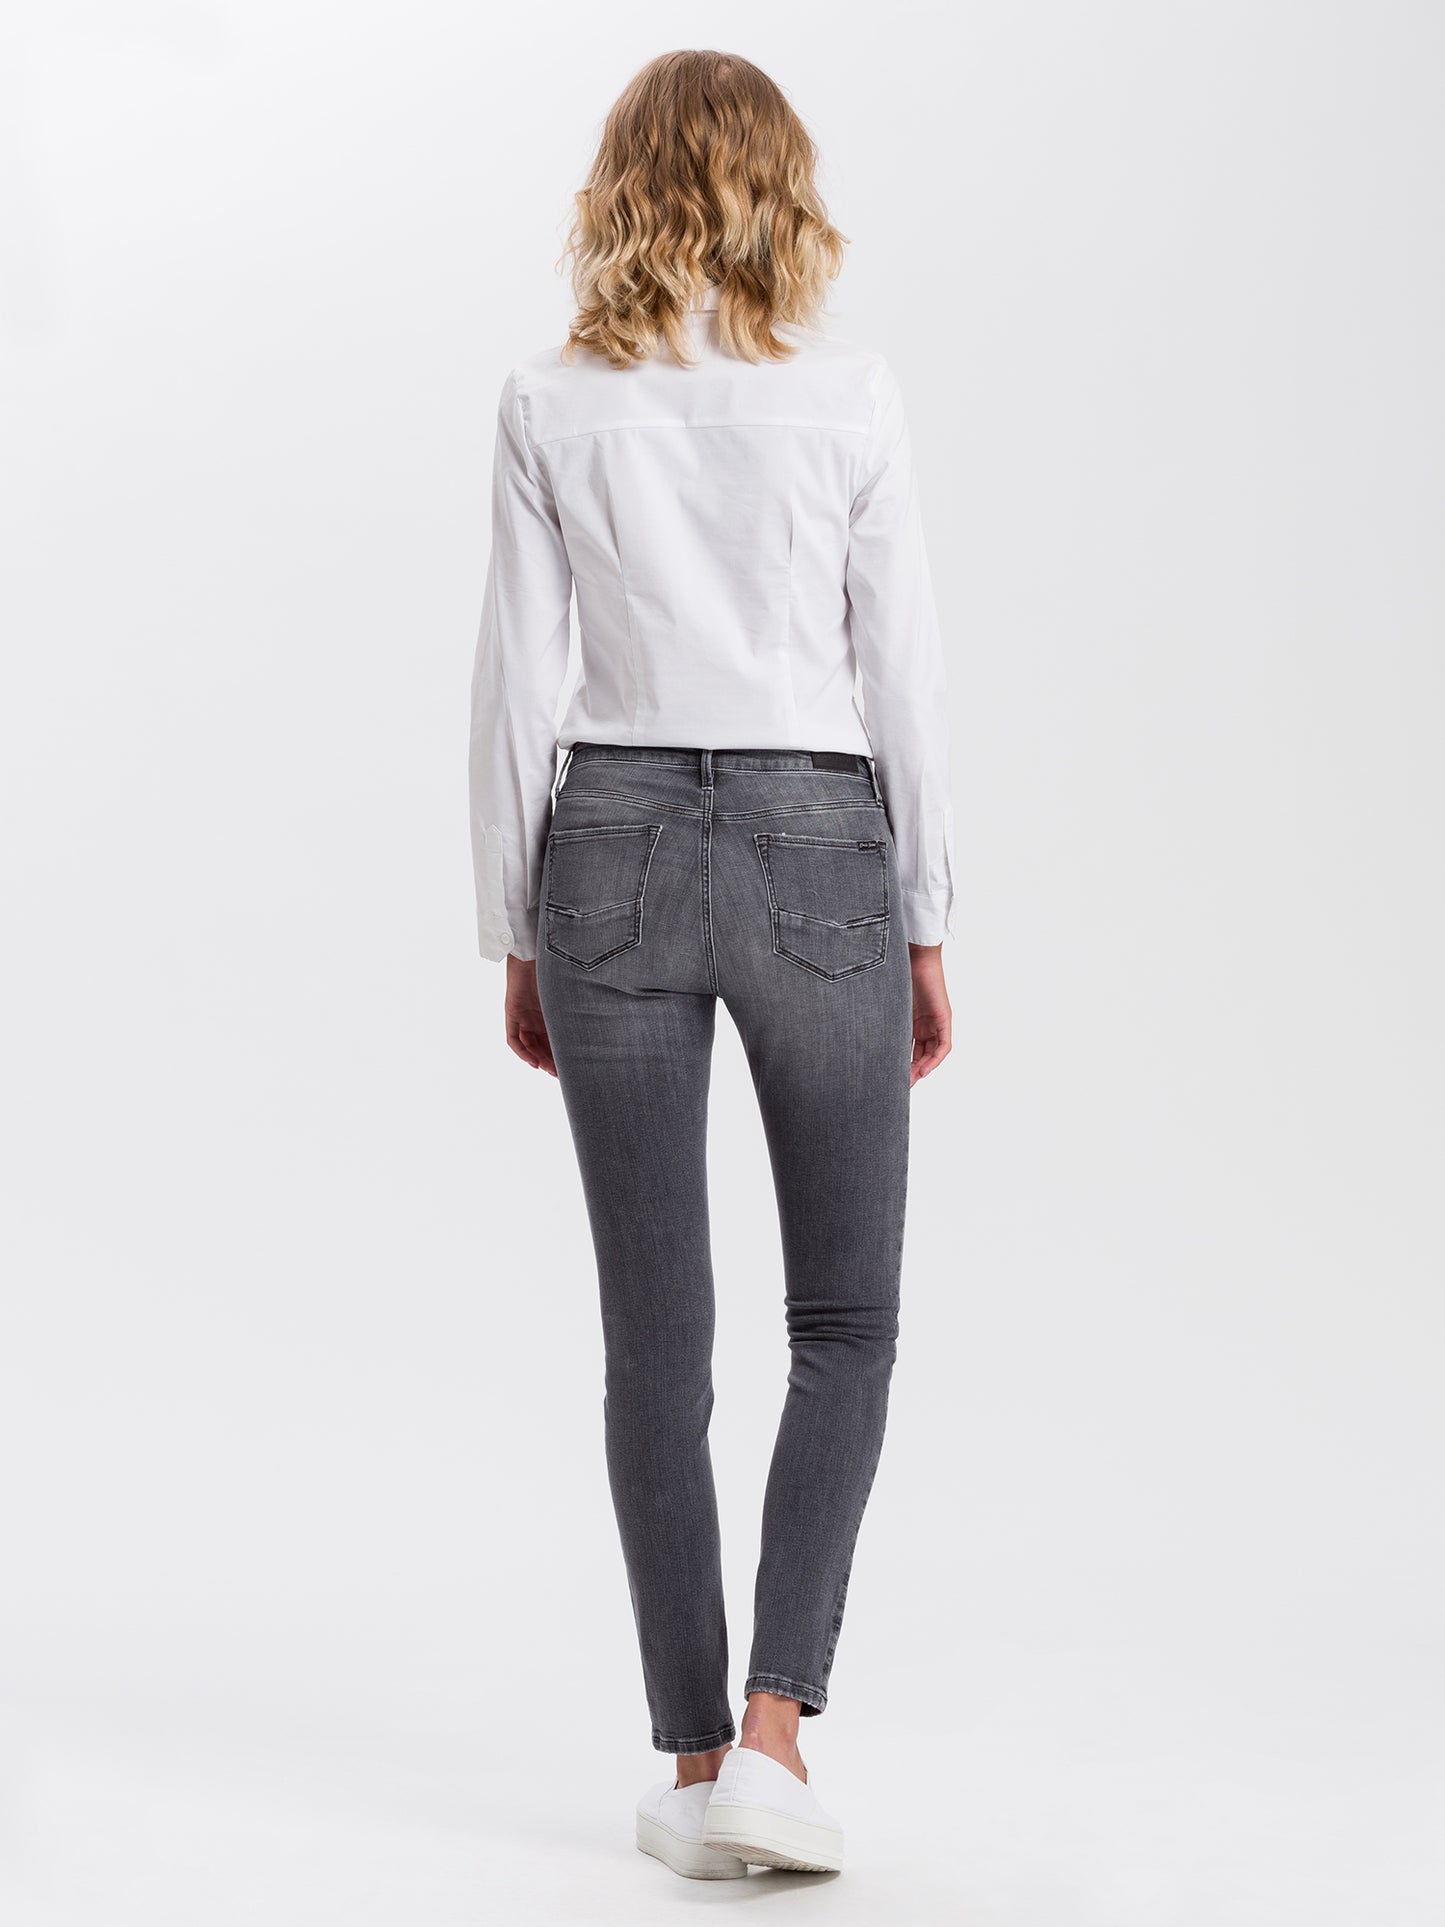 Alan women's jeans skinny fit high waist grey